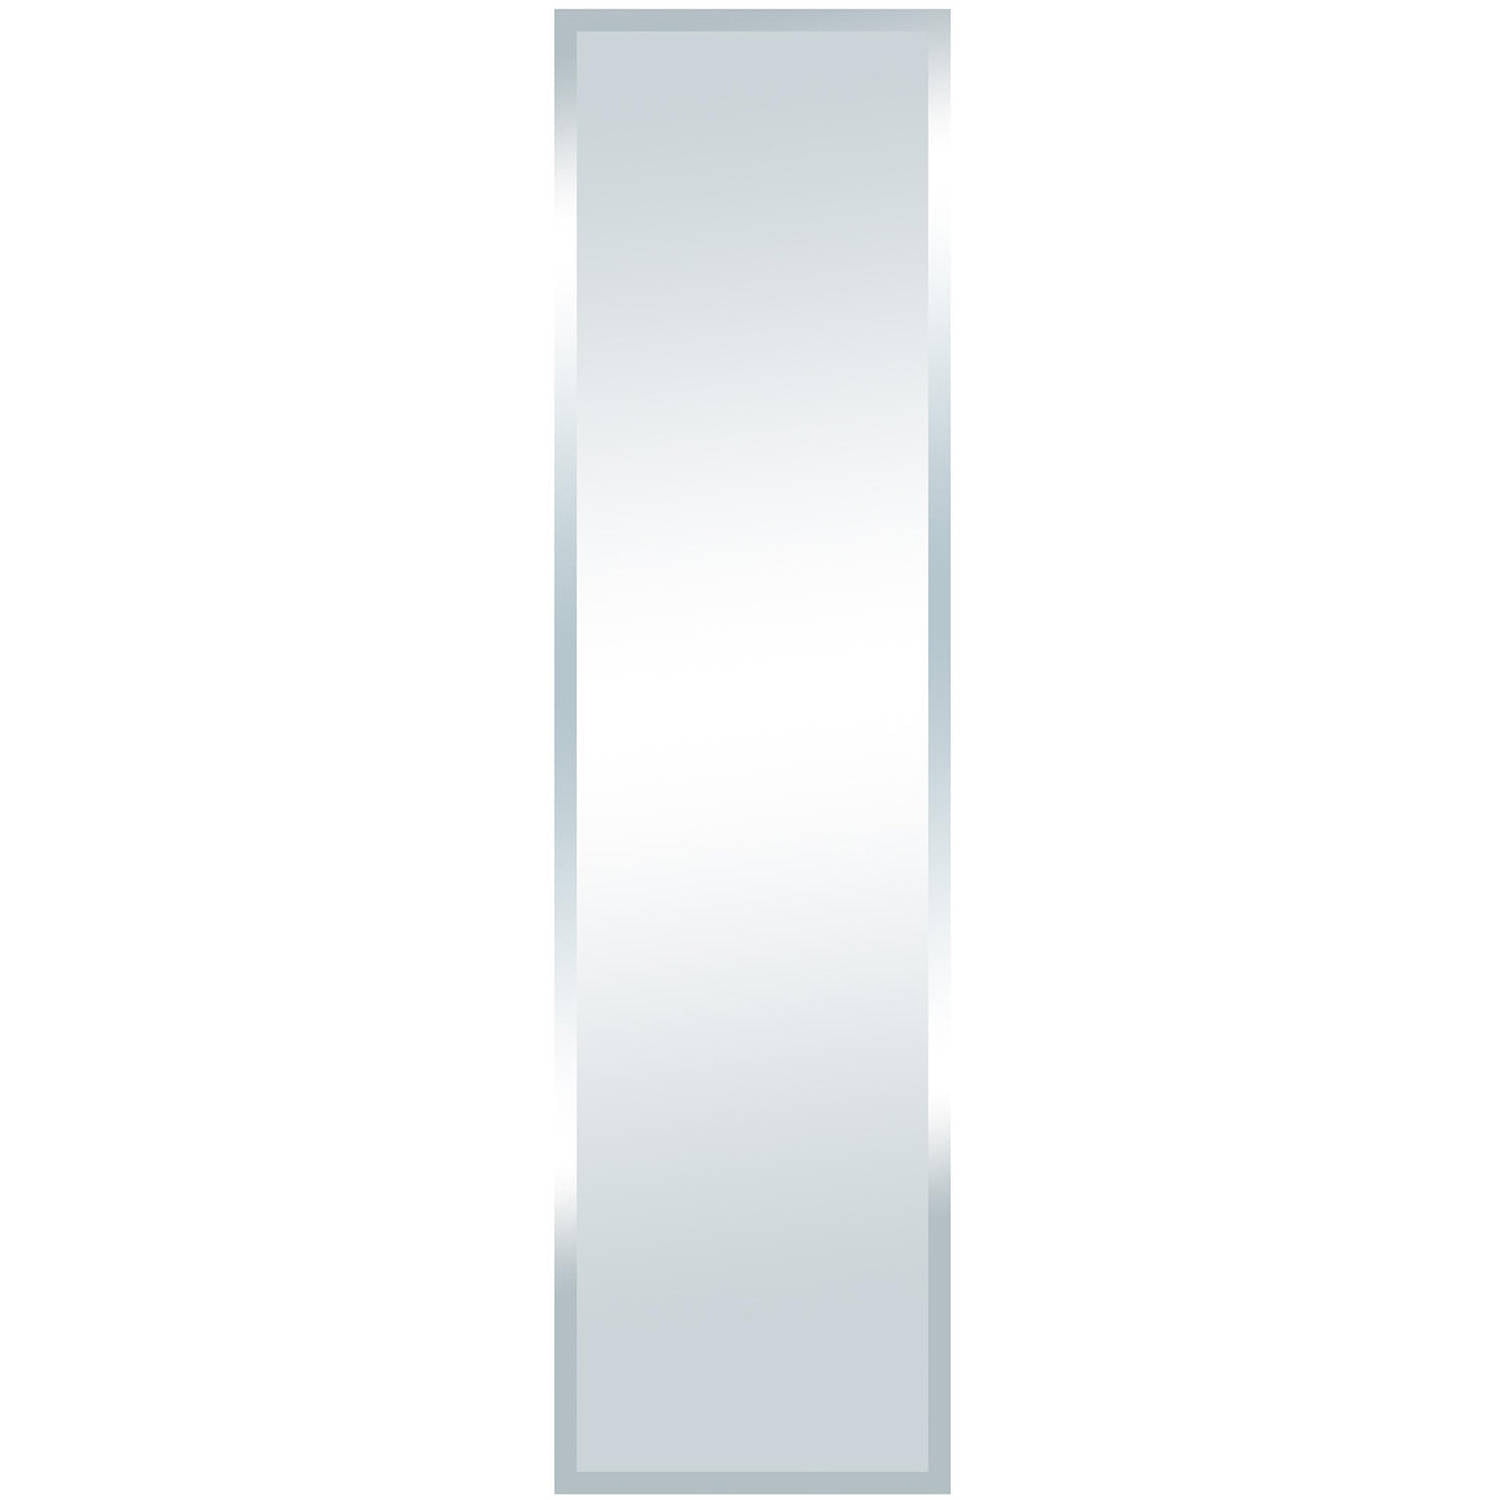 Full Length Beveled Edge Mirror, How To Hang Mainstays Beveled Mirror